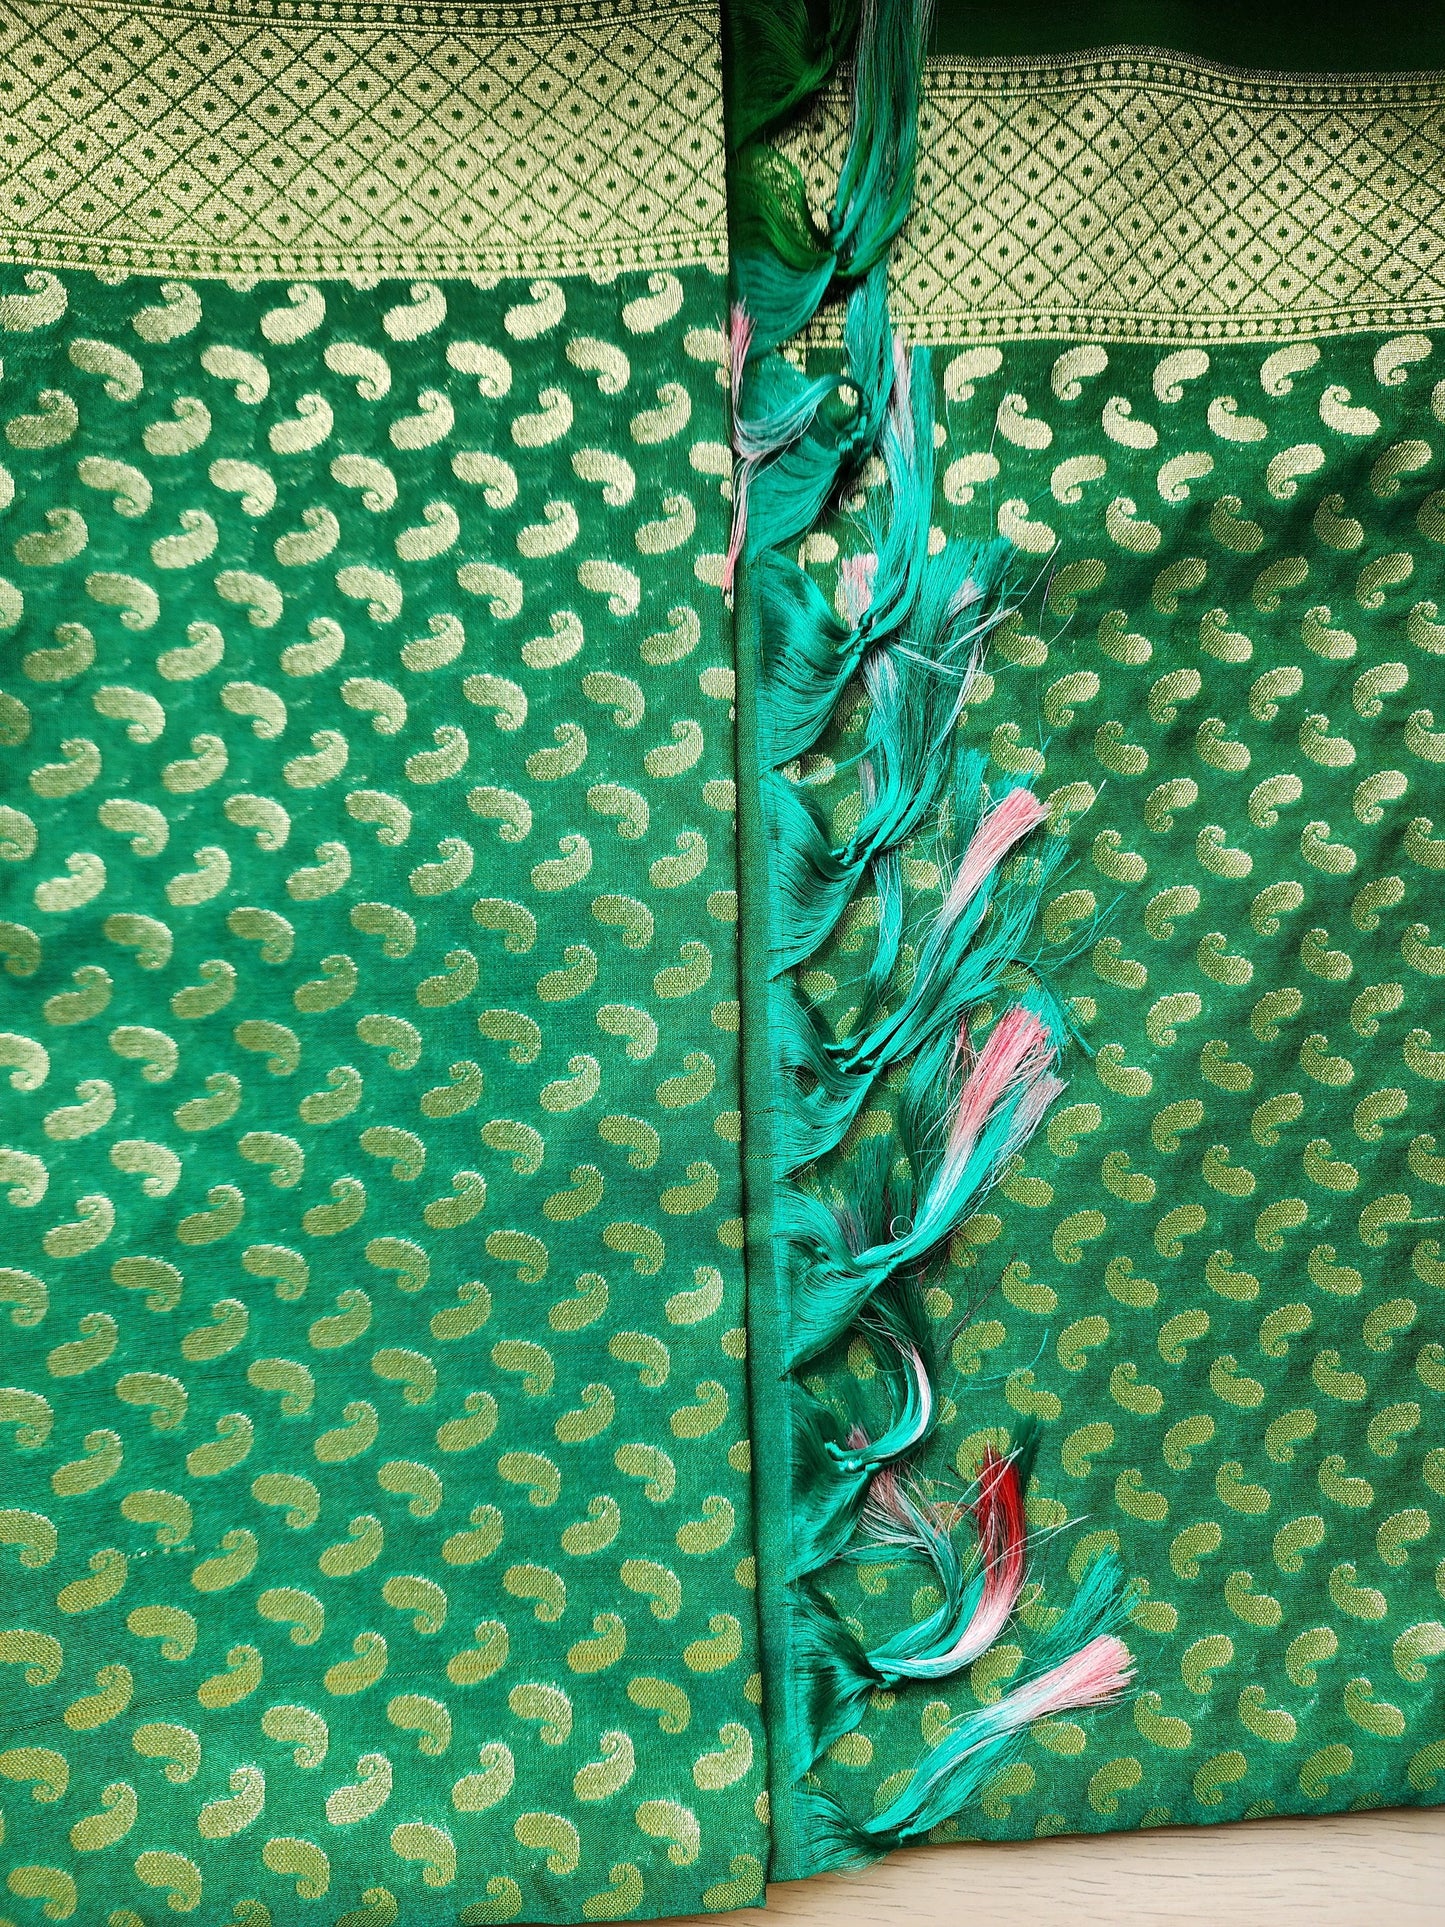 Banarasi Silk Forest Green Dupatta with gold handweaving, Indian traditional and Festive designer dupatta, luxurious soft Banarsi dupatta